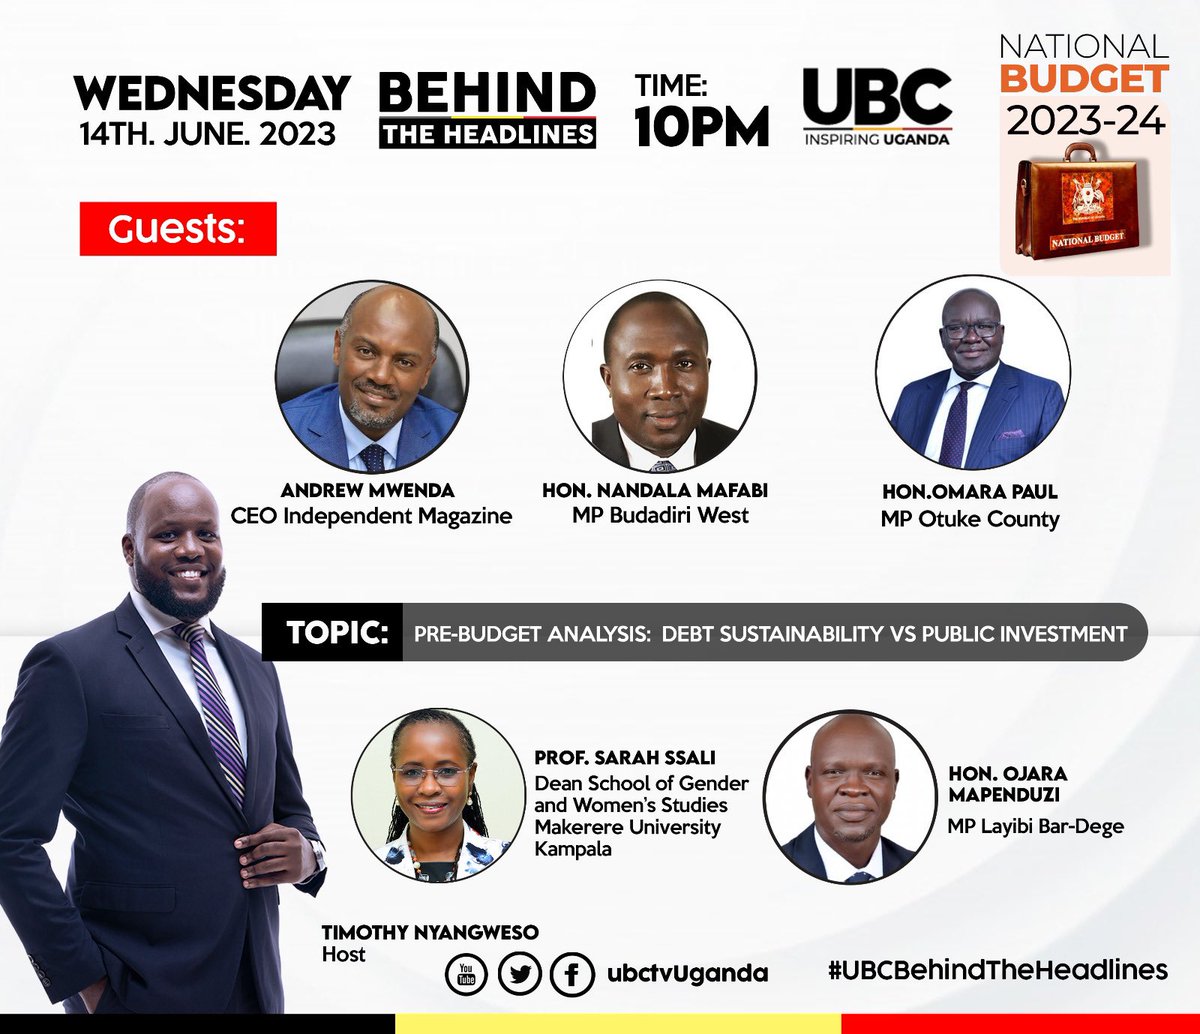 This Wednesday on @ubctvuganda at 10pm #BehindtheHeadlines